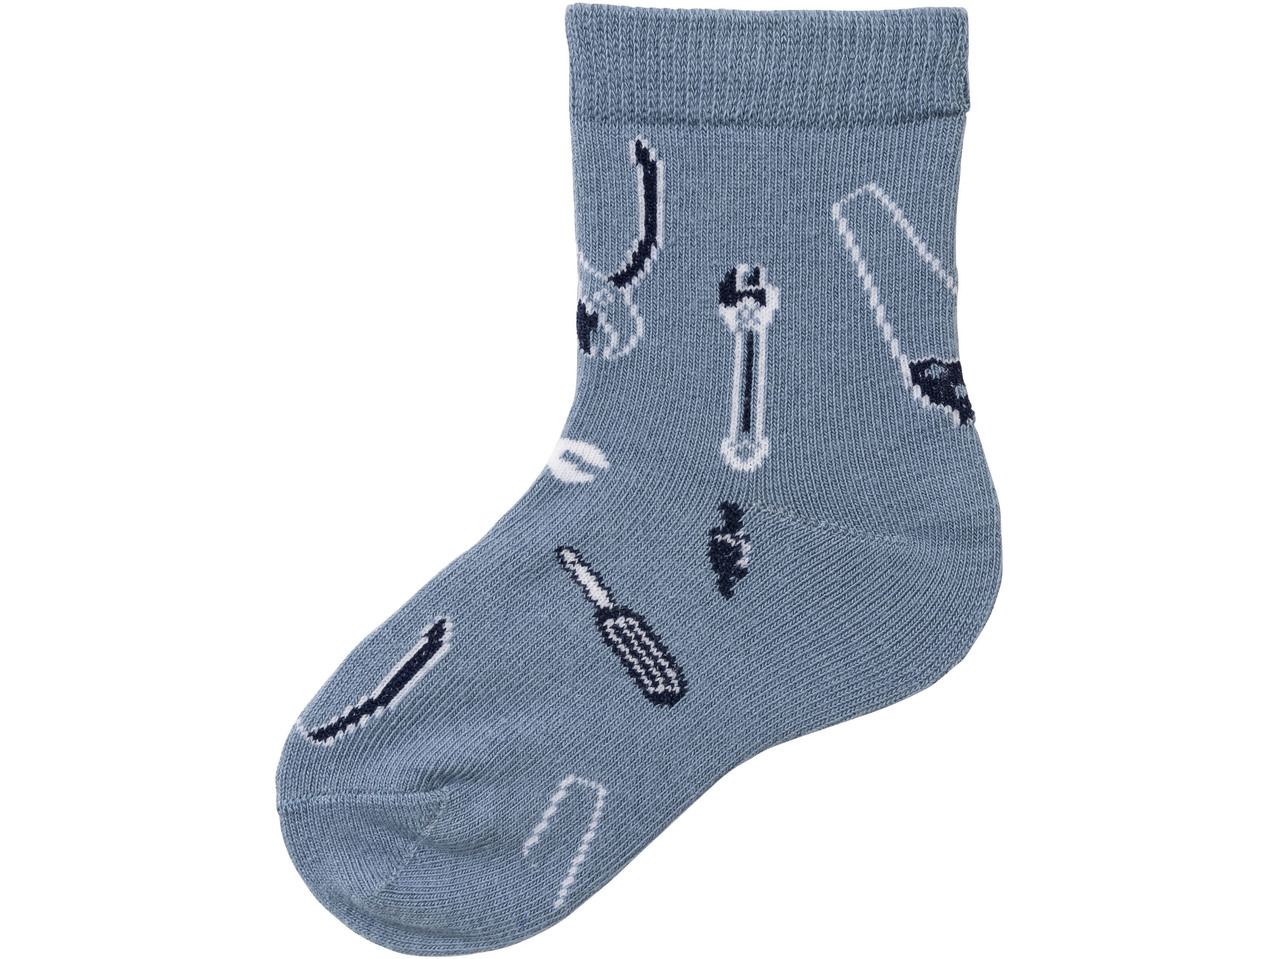 Boys' Socks, 7 pairs